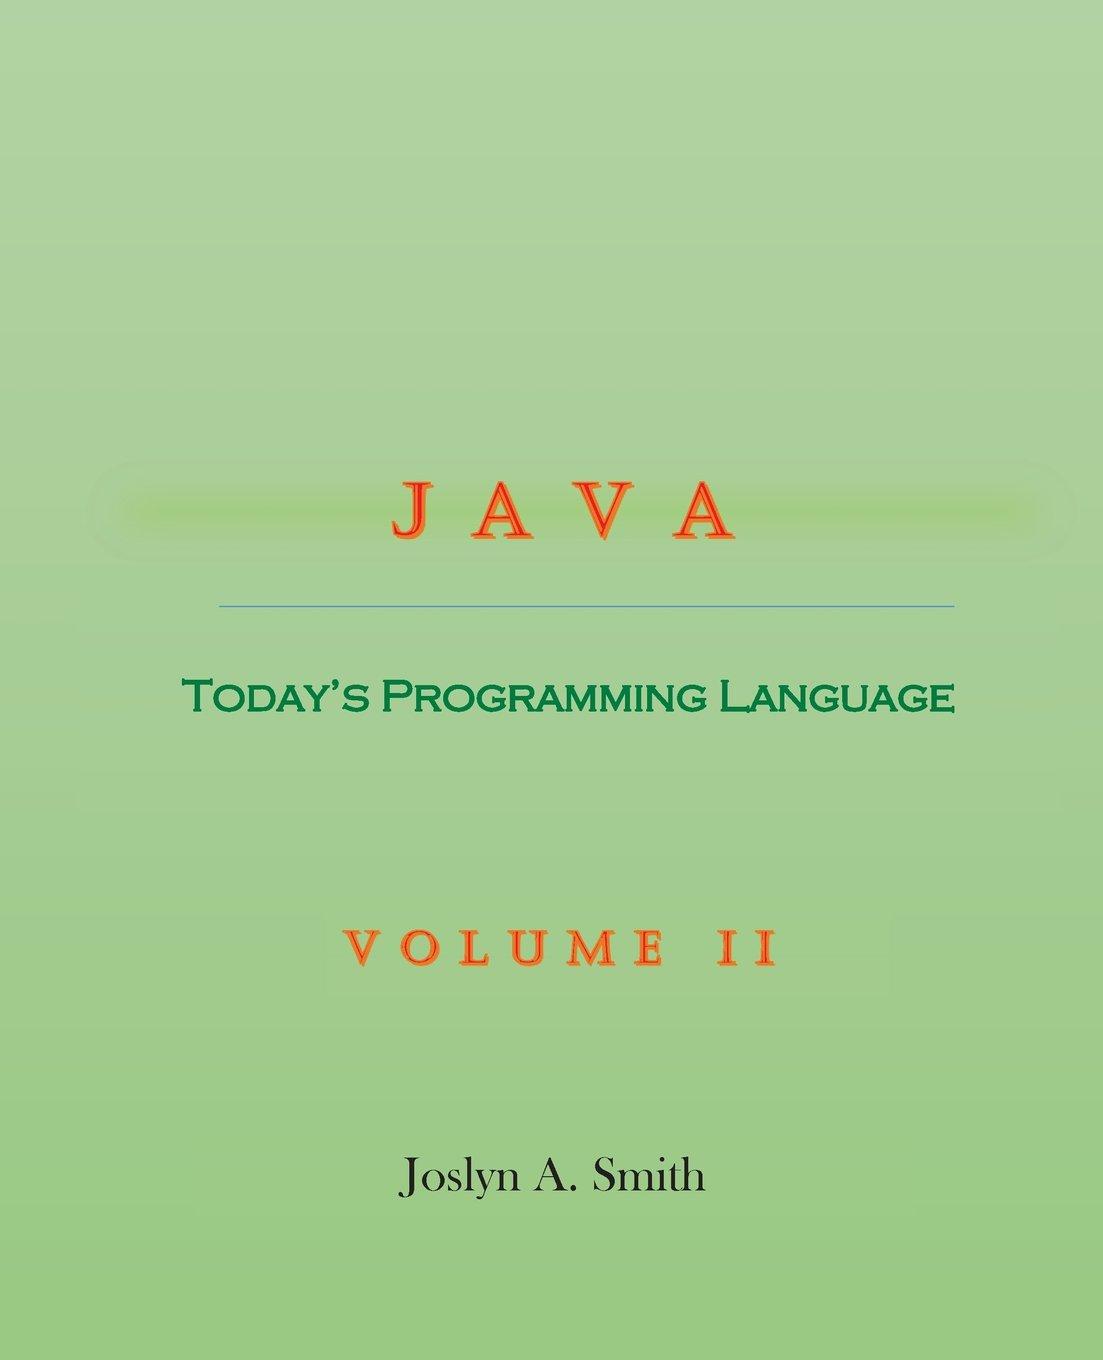 java todays programming language volume ii 1st edition joslyn a. smith 0997817224, 978-0997817225